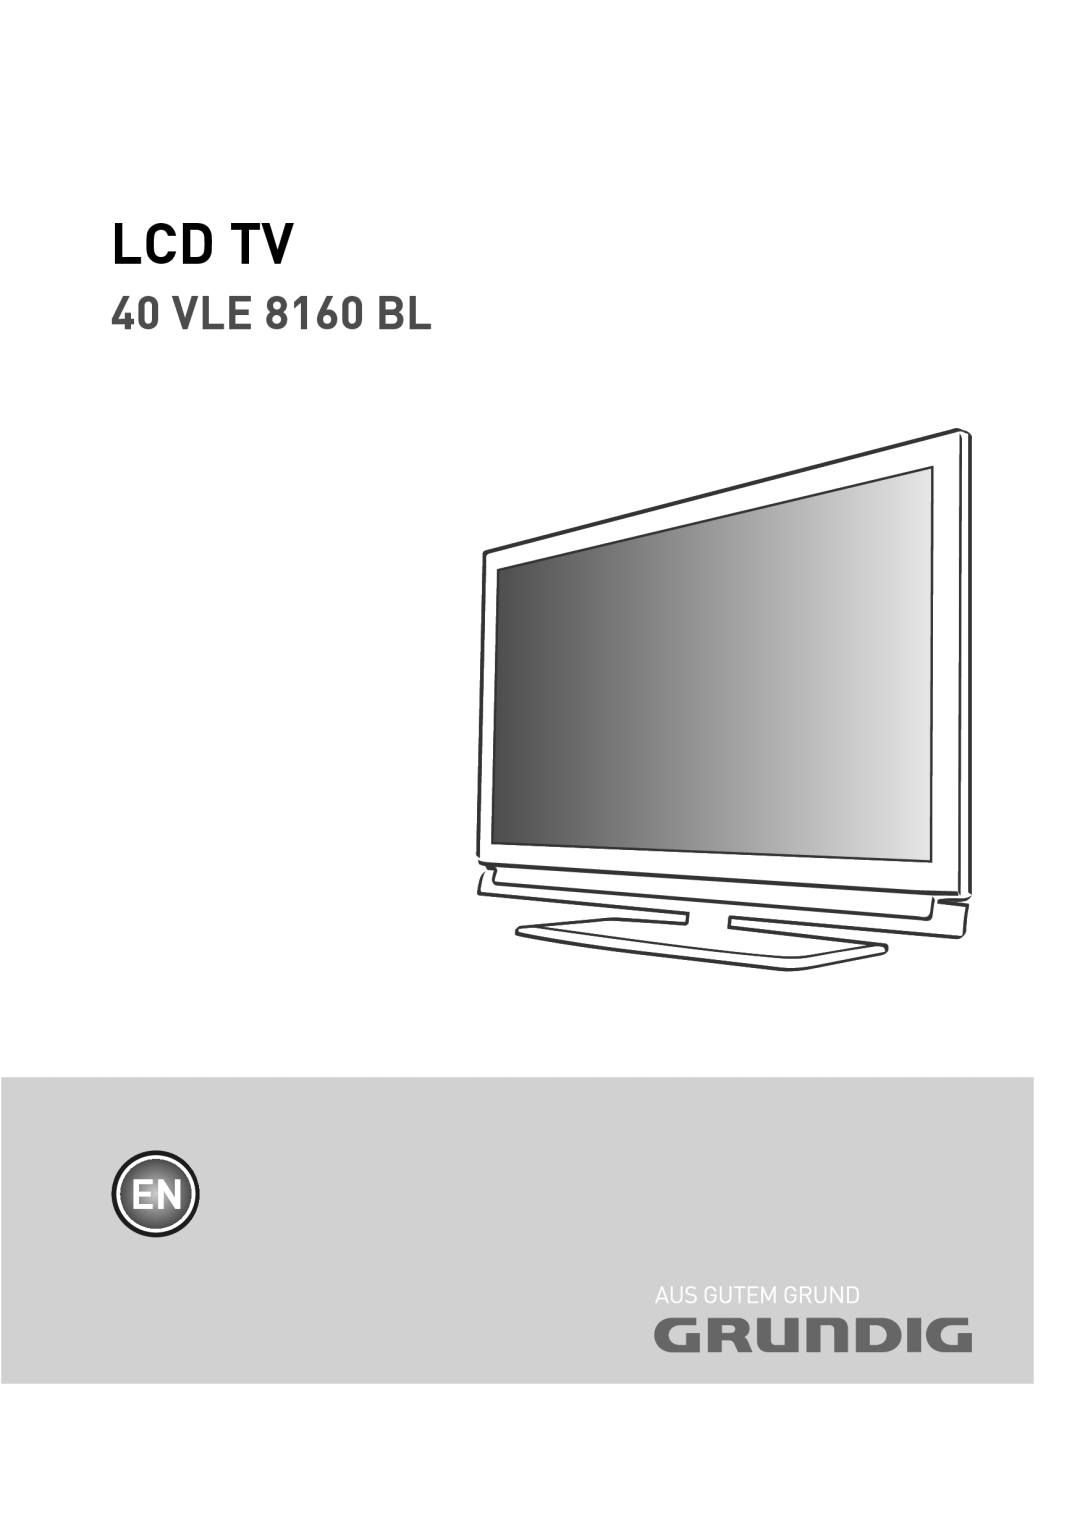 Grundig 40 VLE 8160 BL manual Lcd Tv 